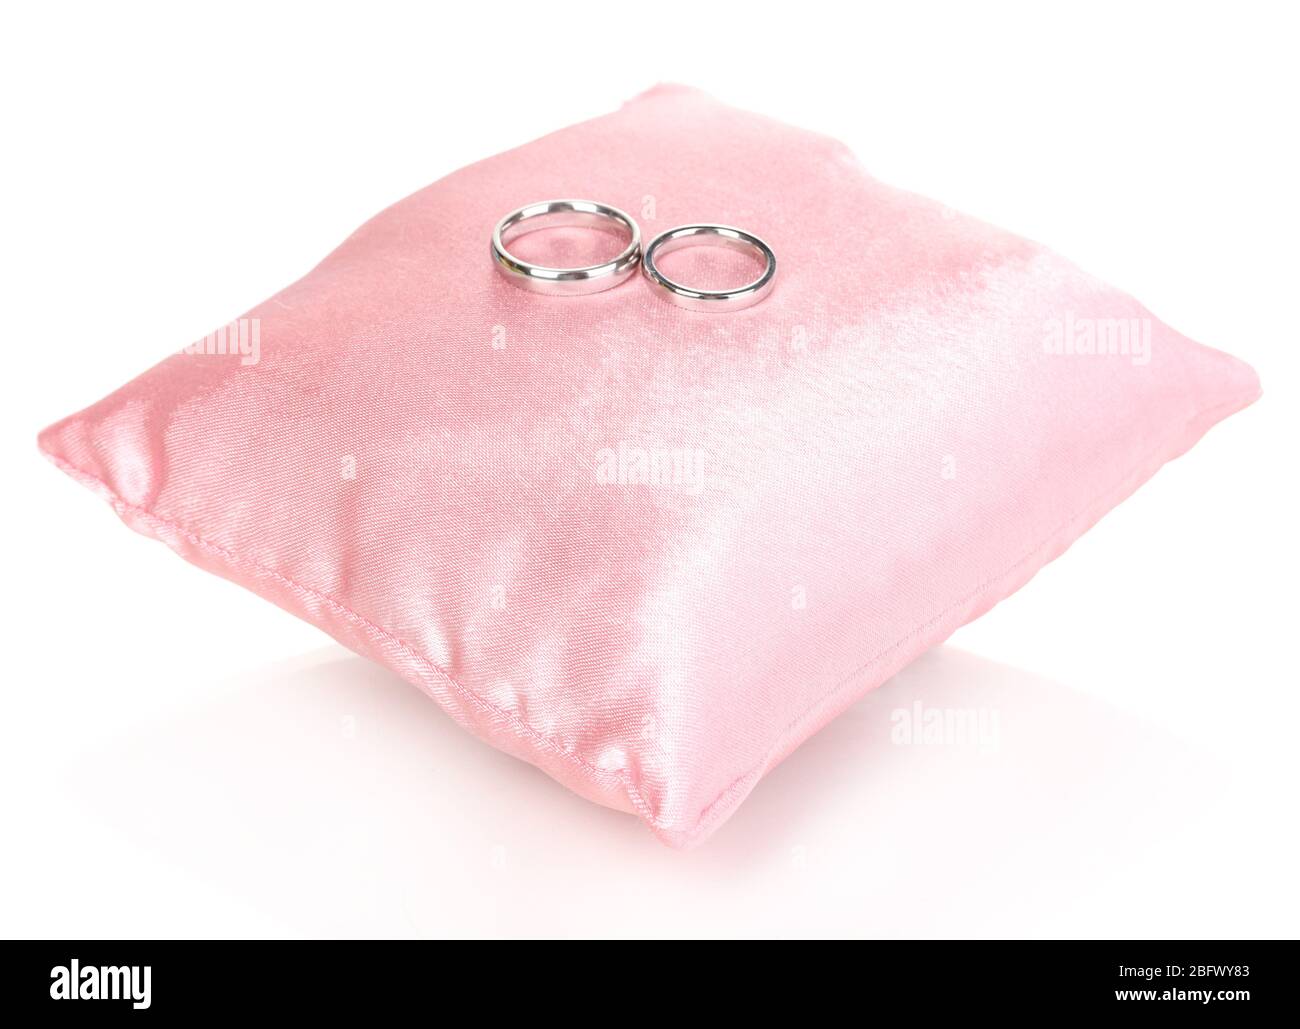 Wedding rings on satin pillow isolated on white Stock Photo